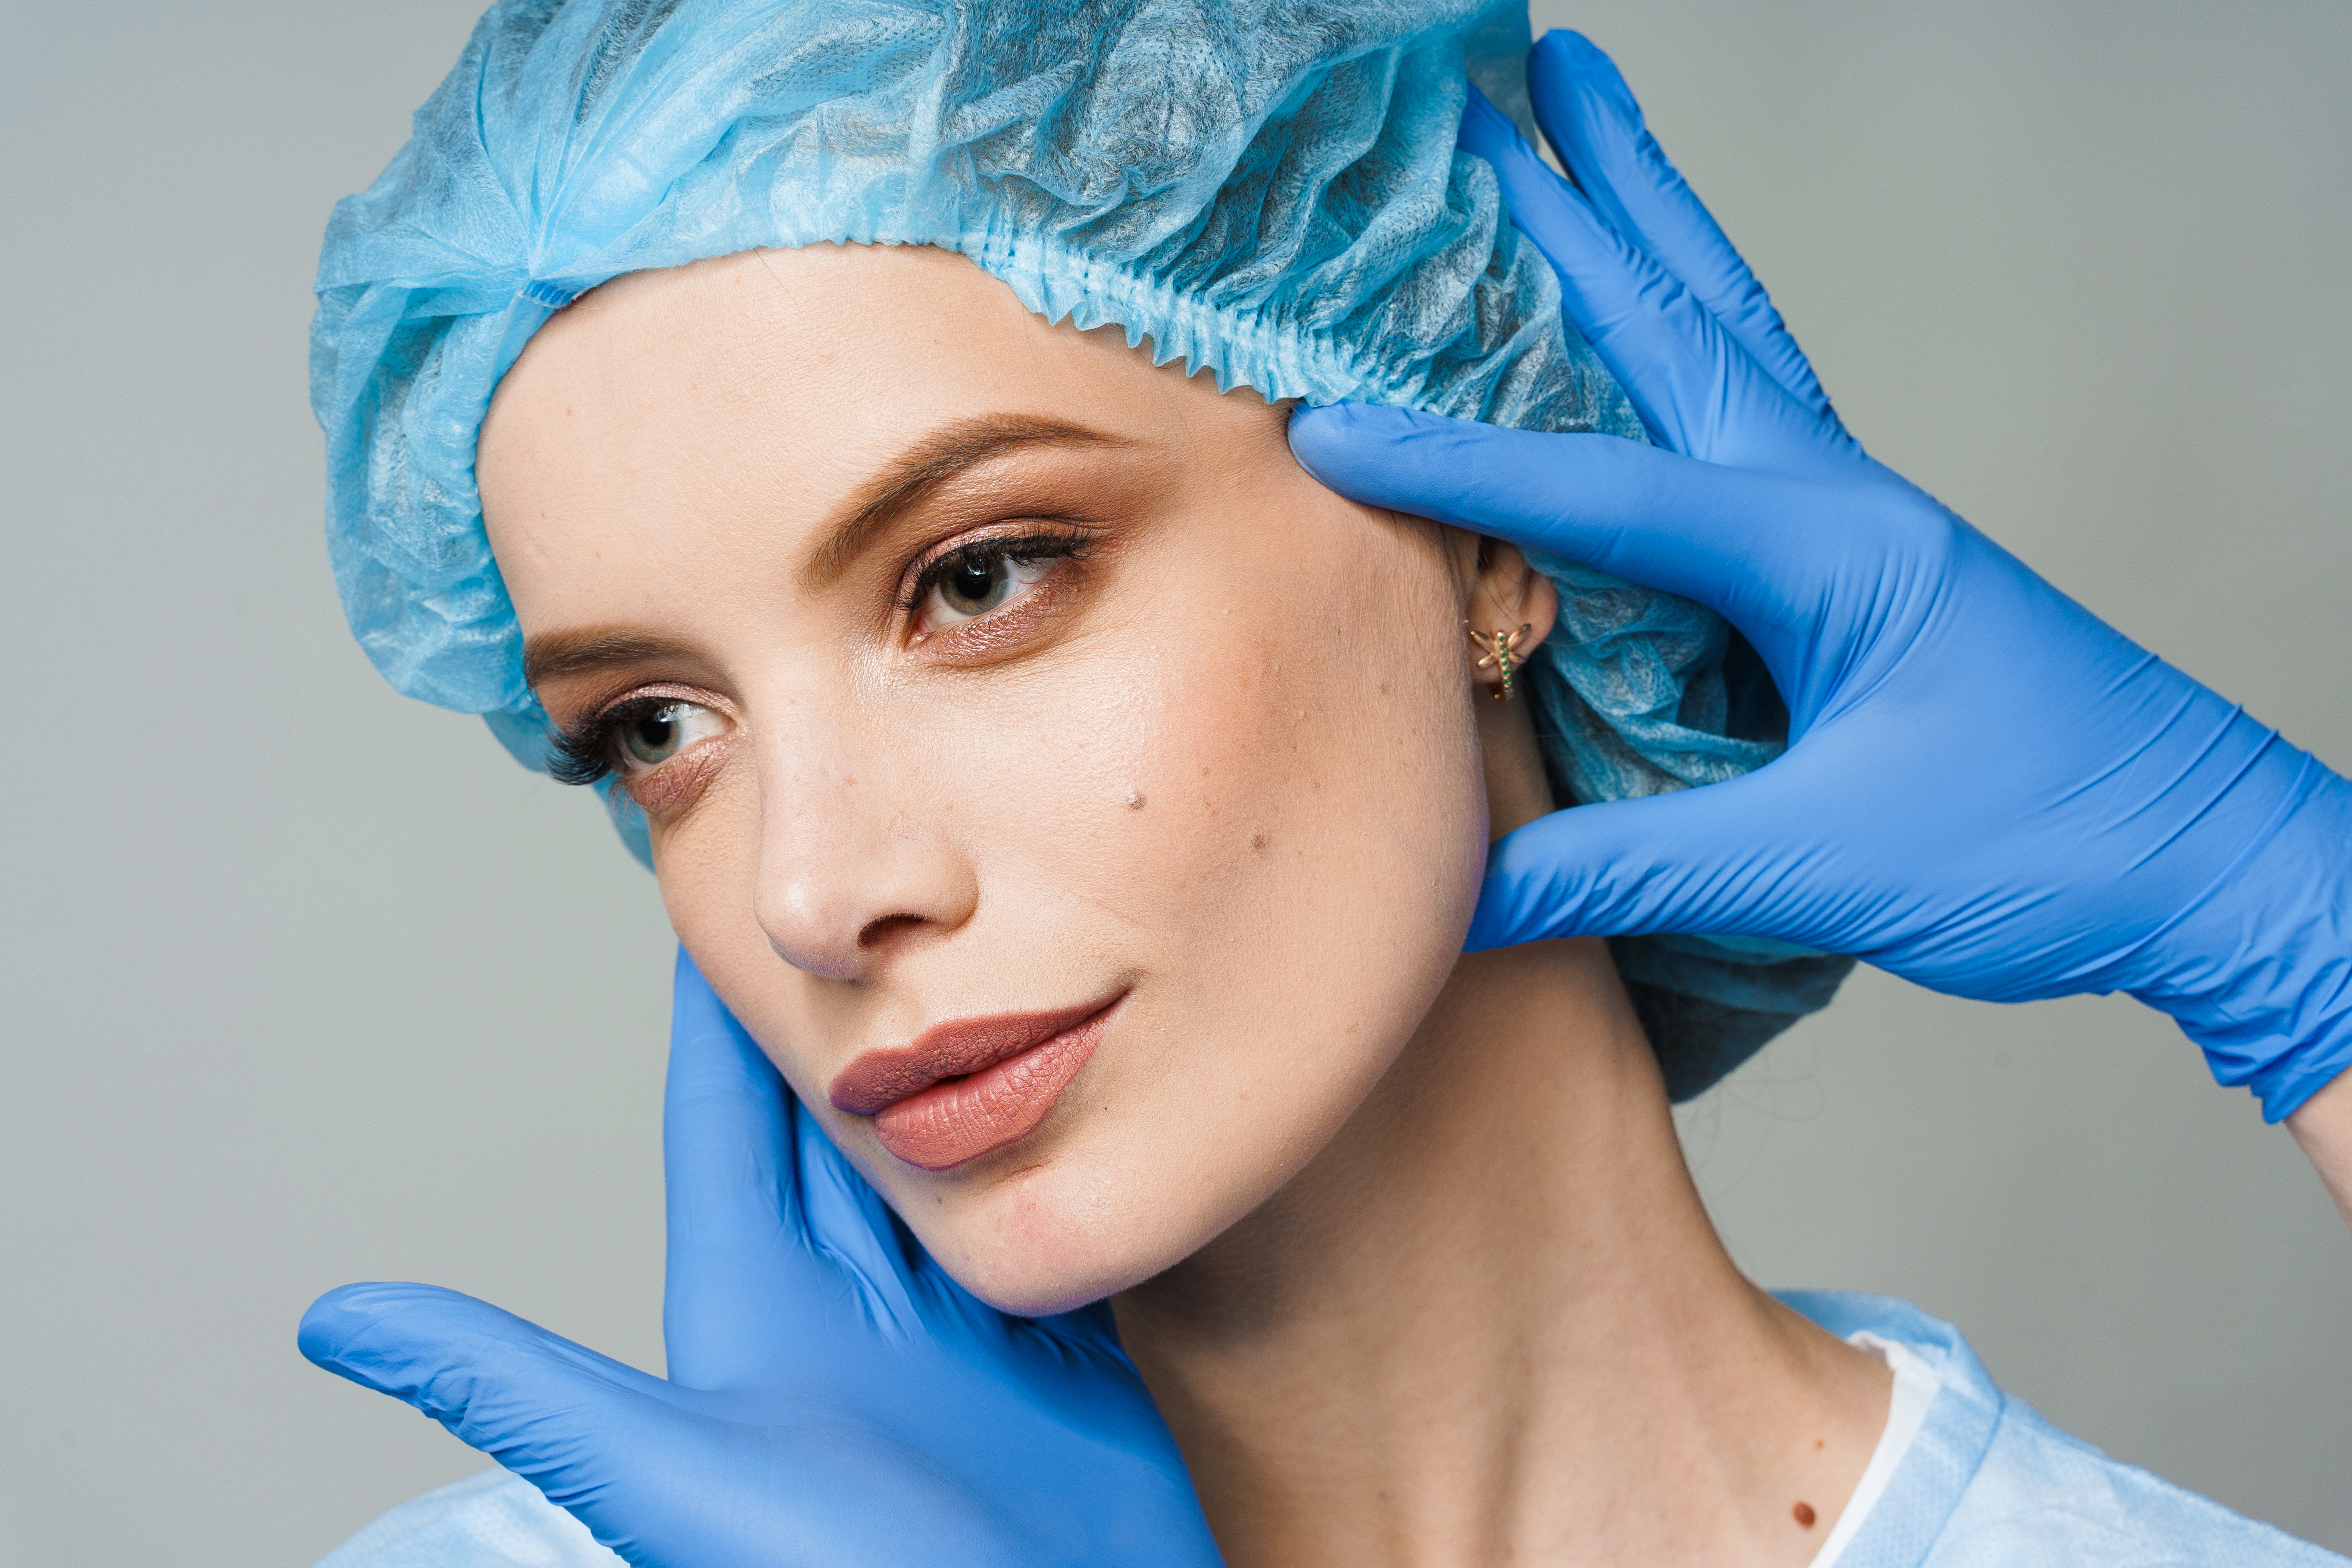 Woman preparing for procedure. | Source: Shutterstock